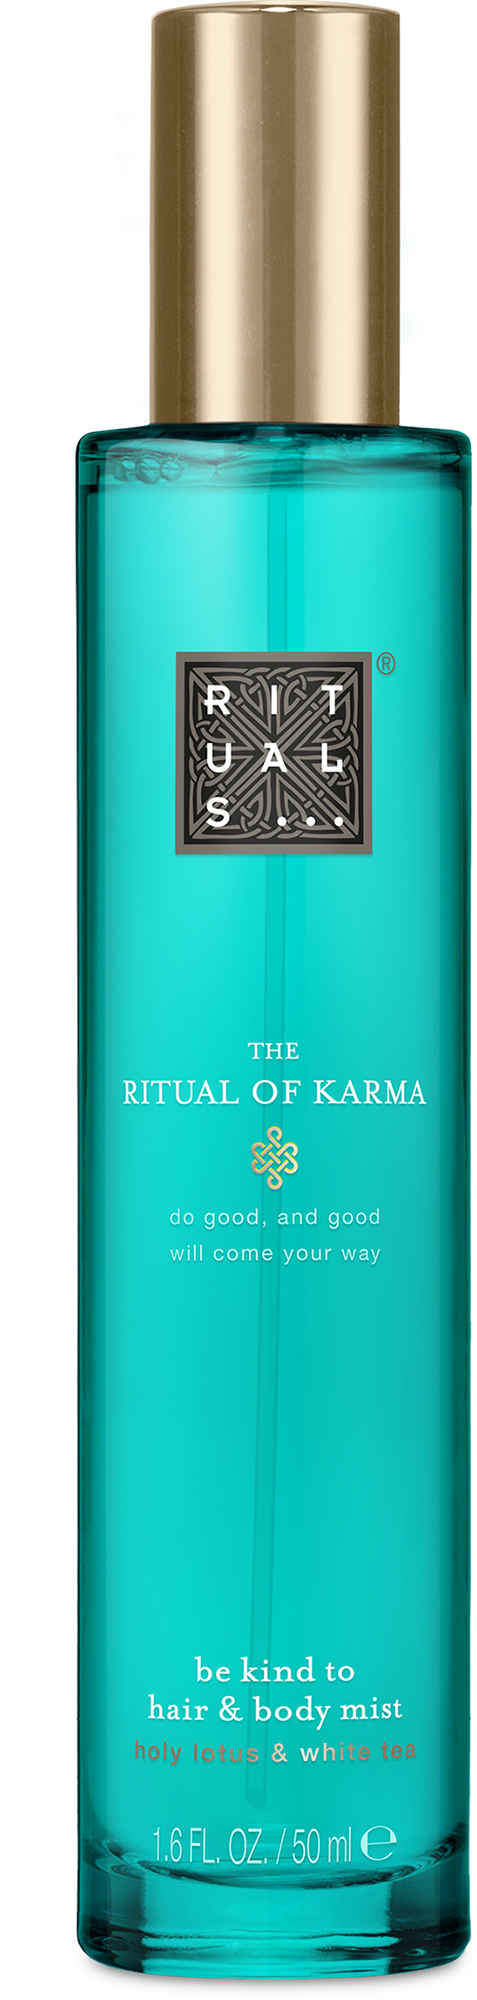 The Ritual of Karma Water Body Spray